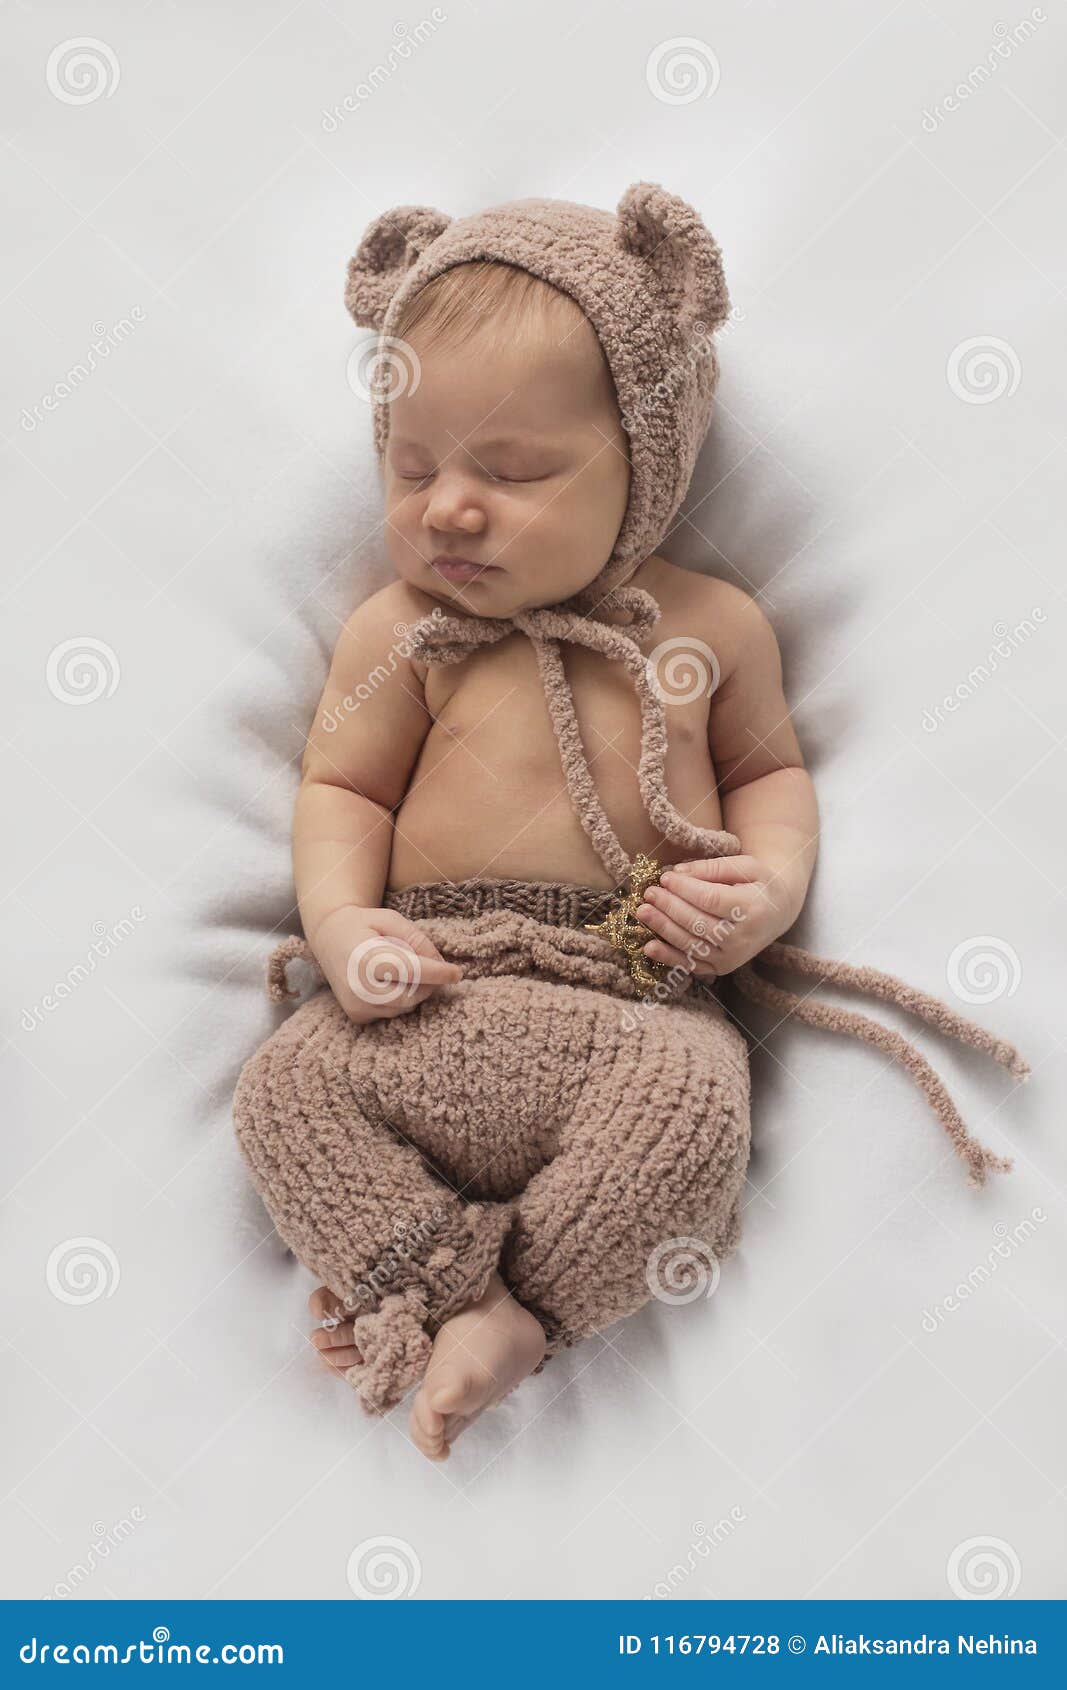 Newborn Baby Sleeps In A Bear Costume Stock Photo - Image ...